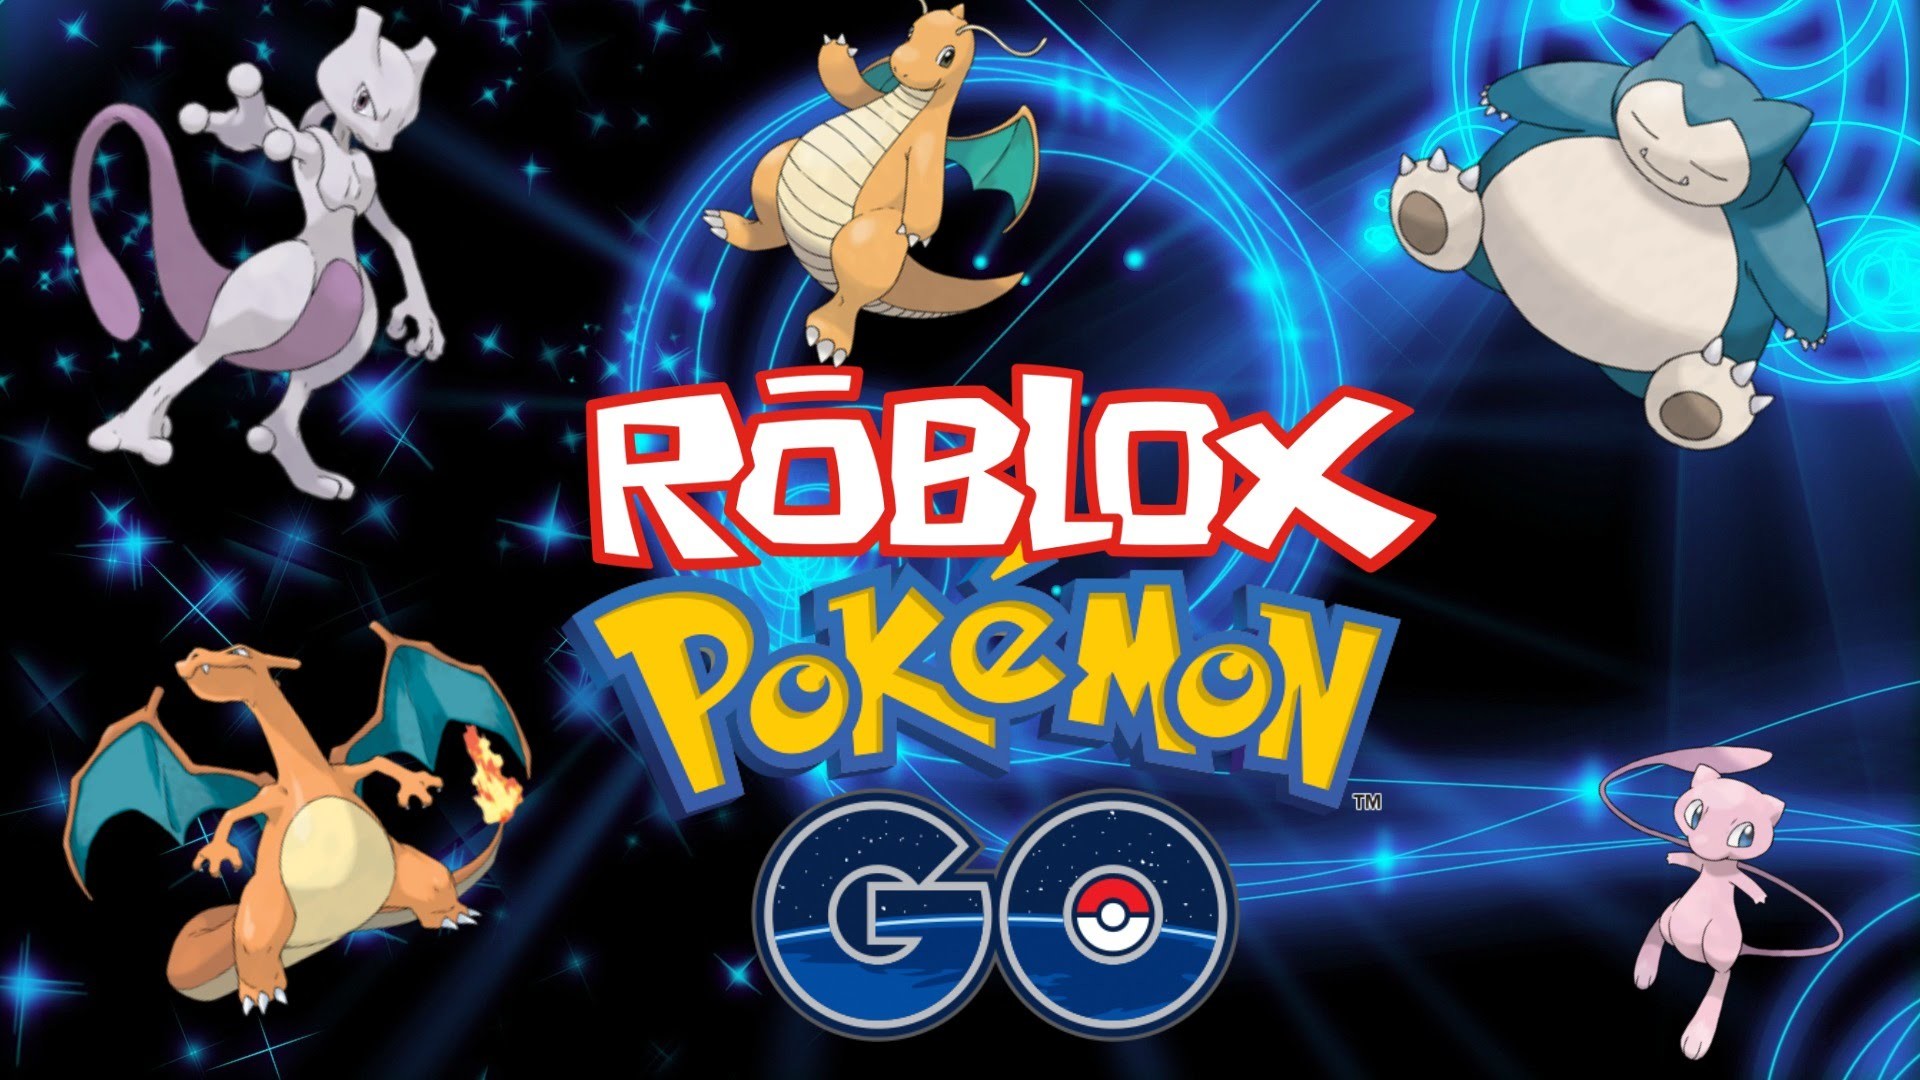 ROBLOX Pokemon Go – How to get Mew, Mewtwo, Snorlax, Dragonite Charizard LEGIT